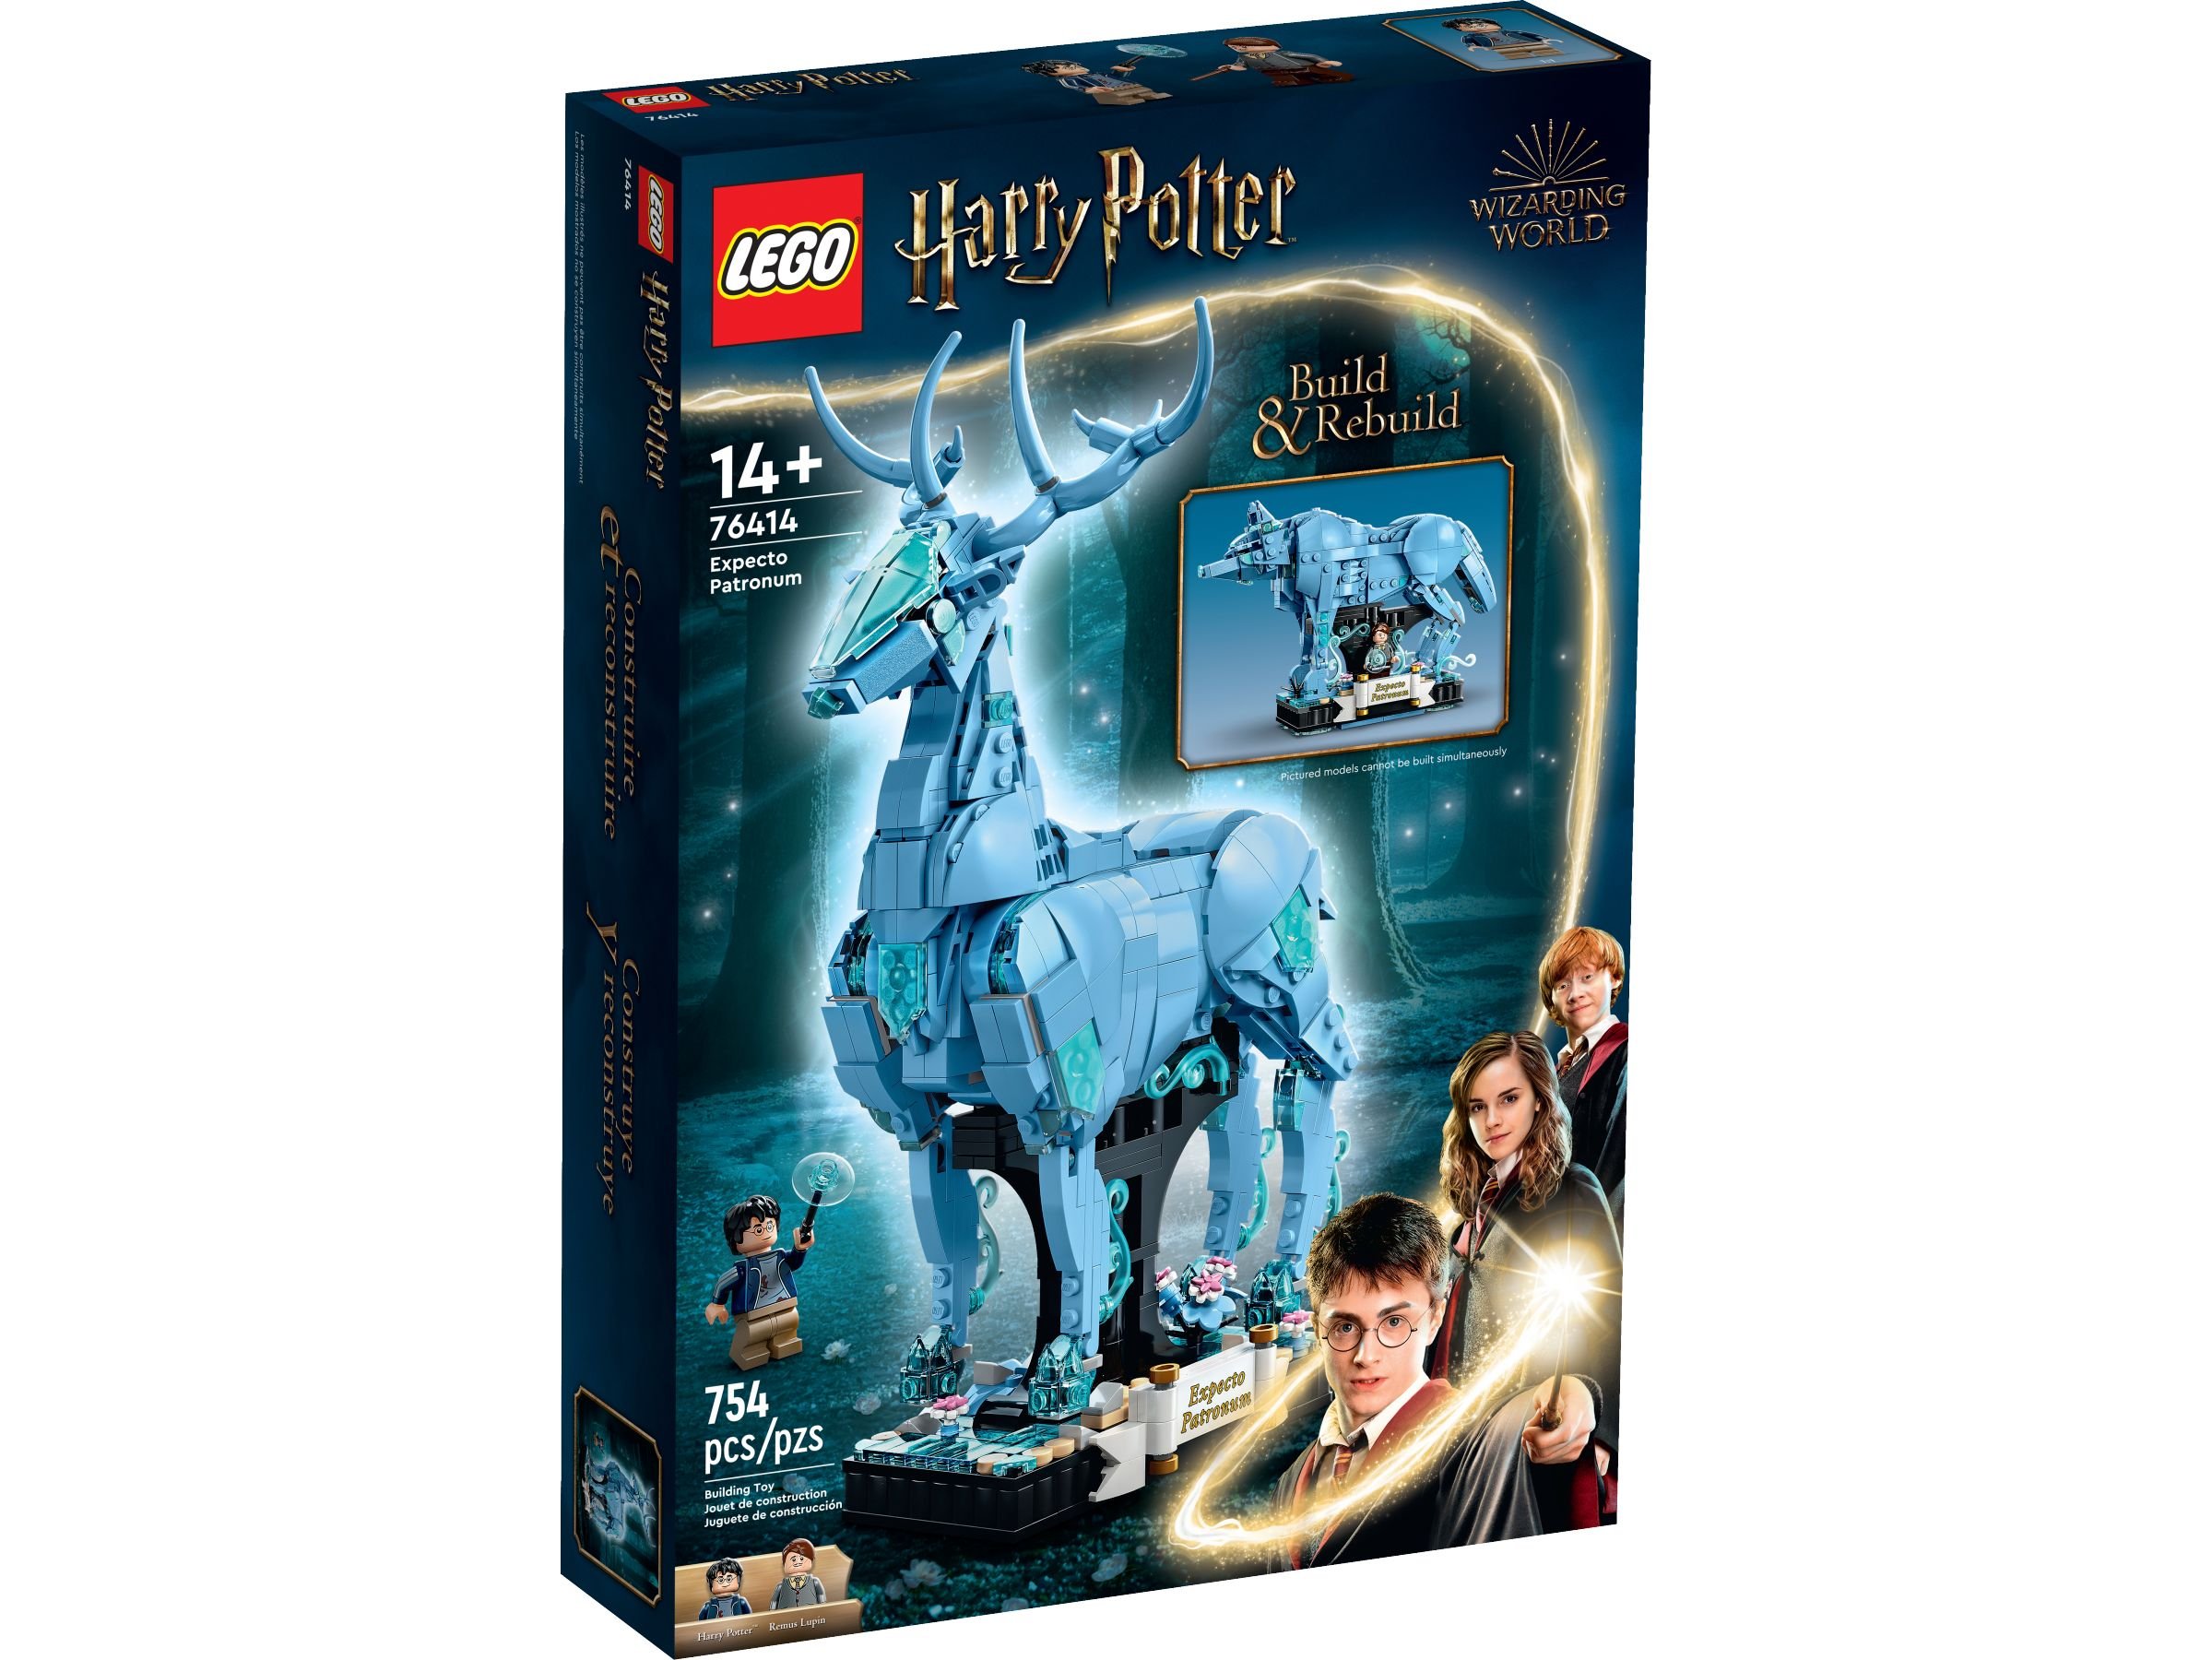 LEGO Harry Potter 76414 Expecto Patronum LEGO_76414_alt1.jpg